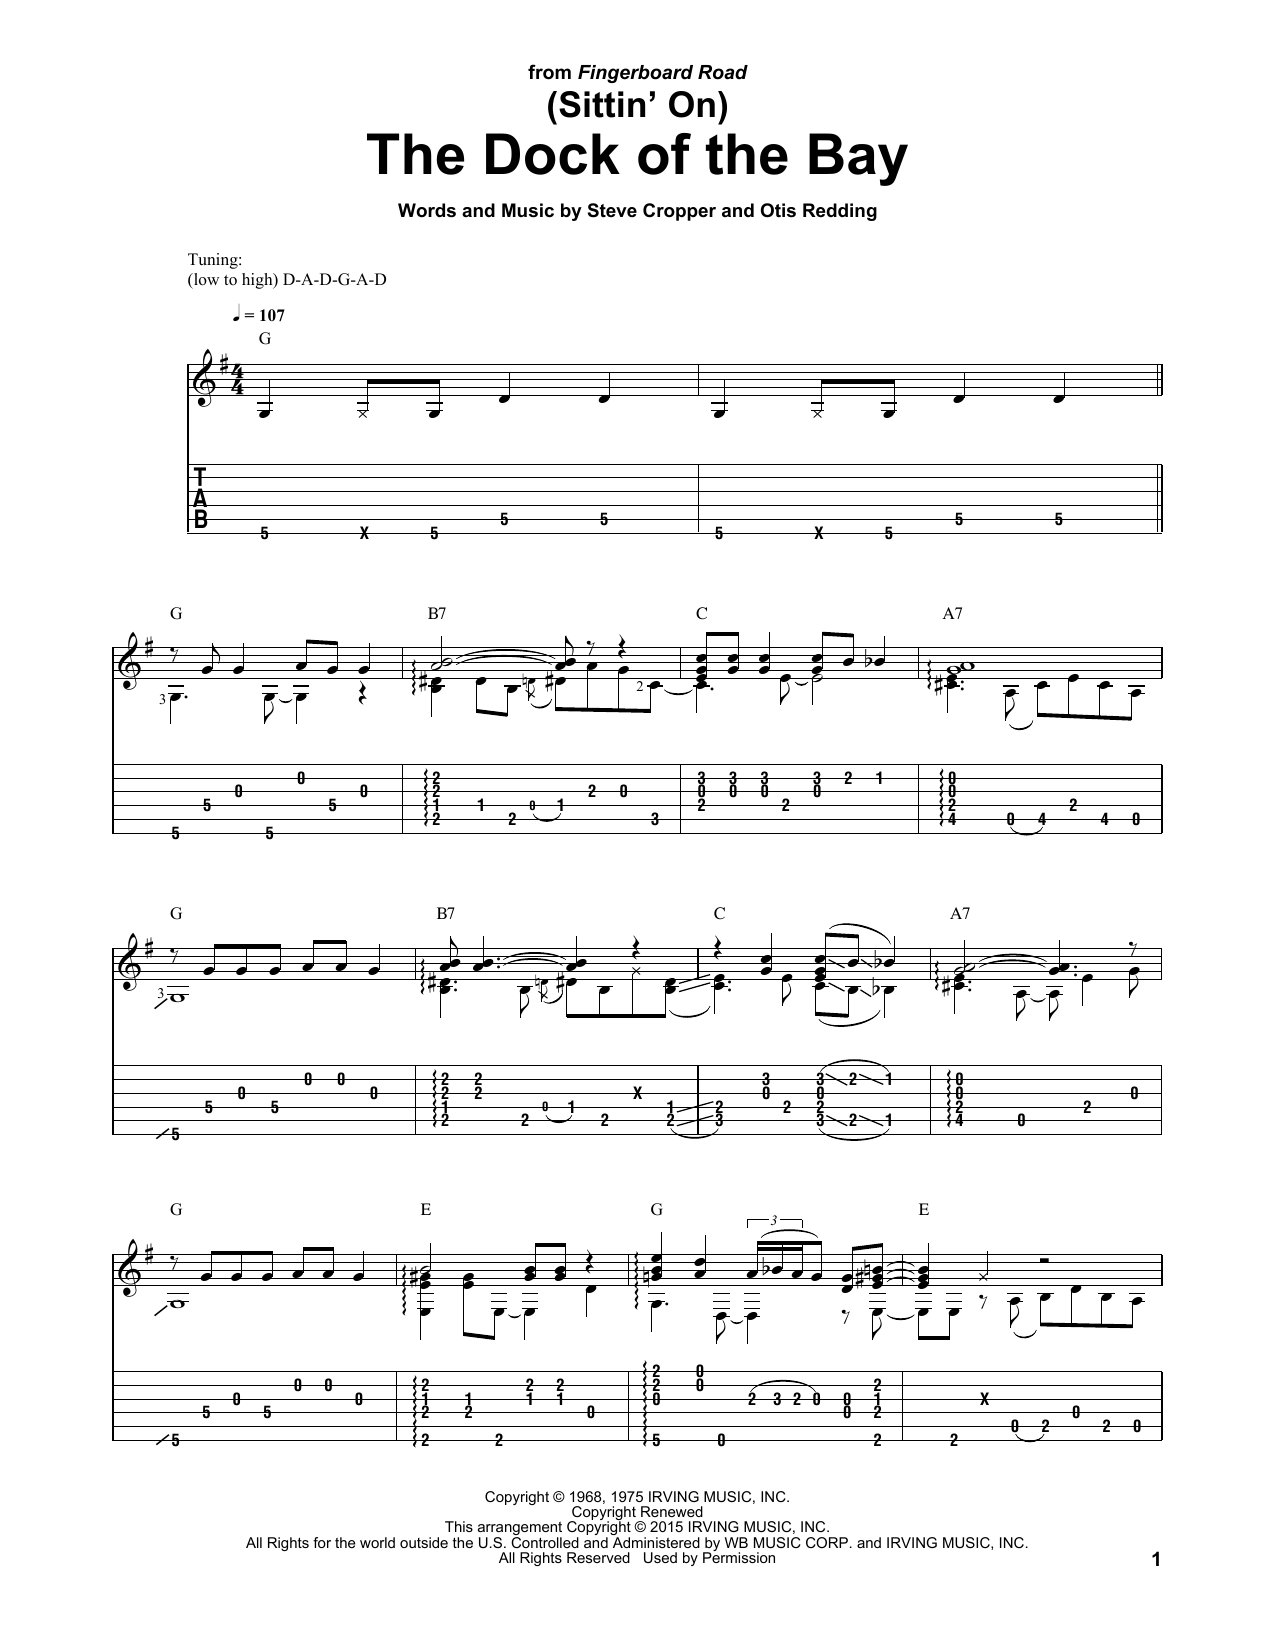 Otis Redding (Sittin' On) The Dock Of The Bay Sheet Music Notes & Chords for Guitar Tab - Download or Print PDF